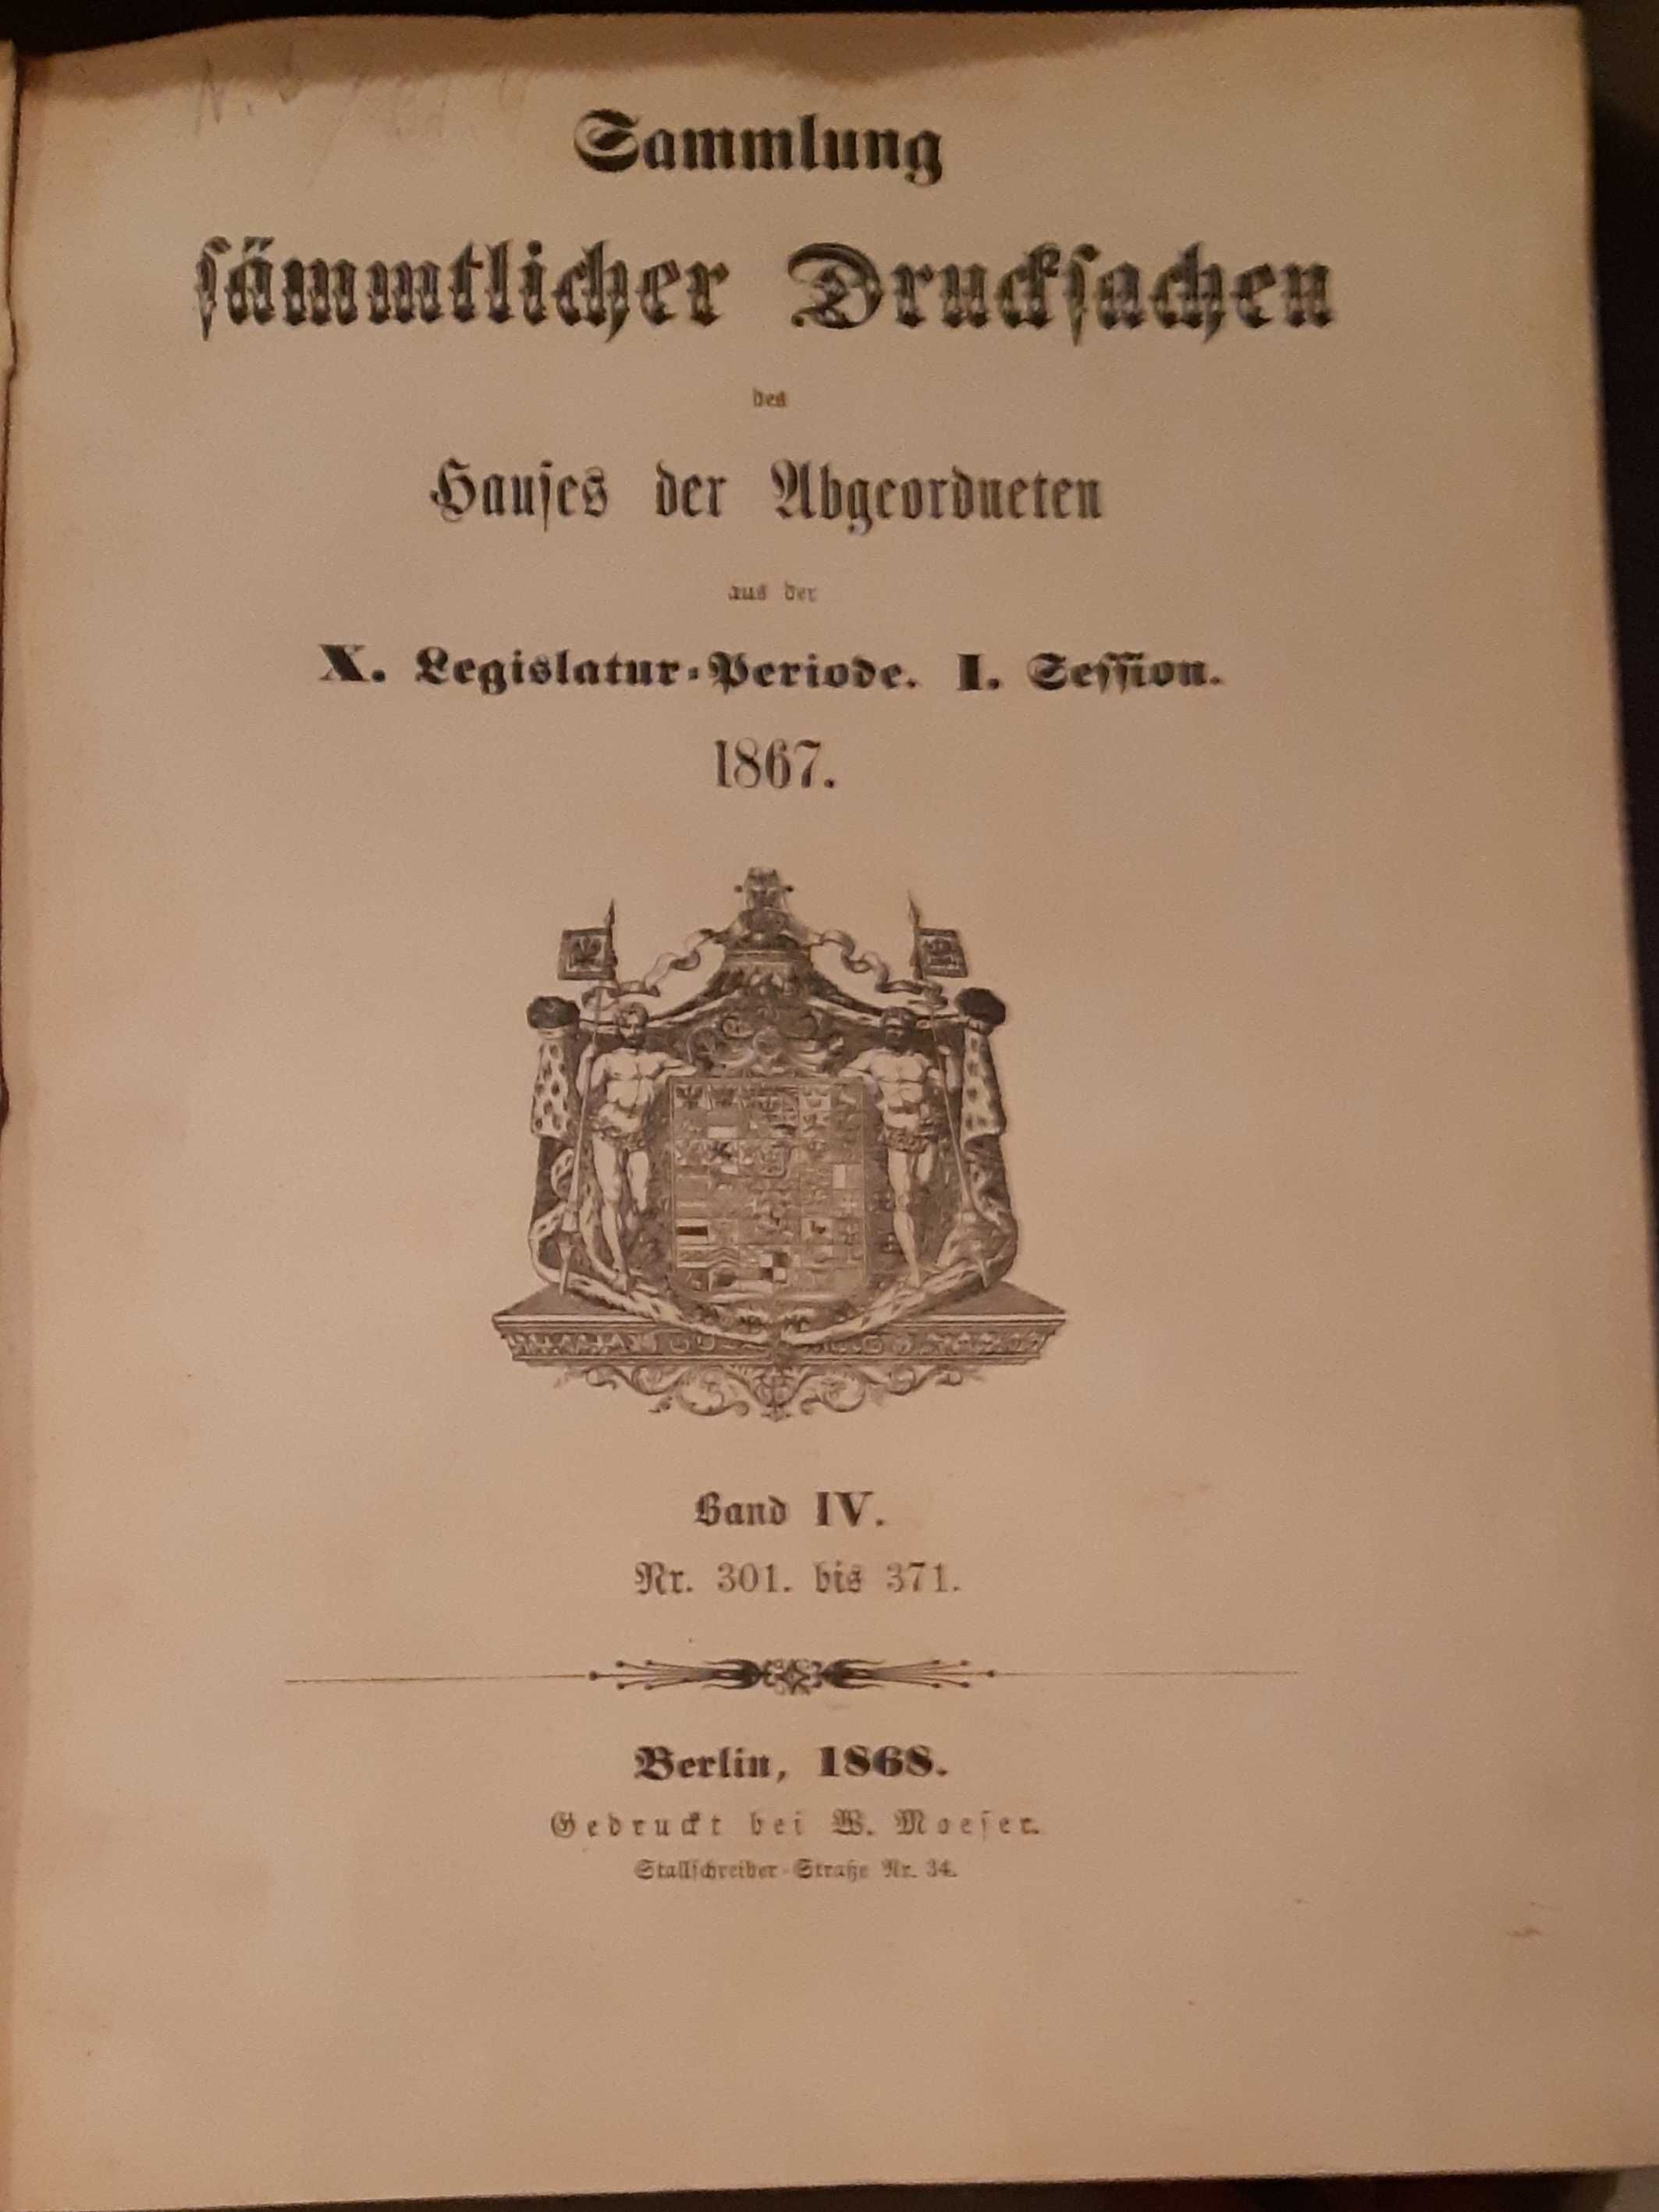 Książka niemiecka z 1867 roku